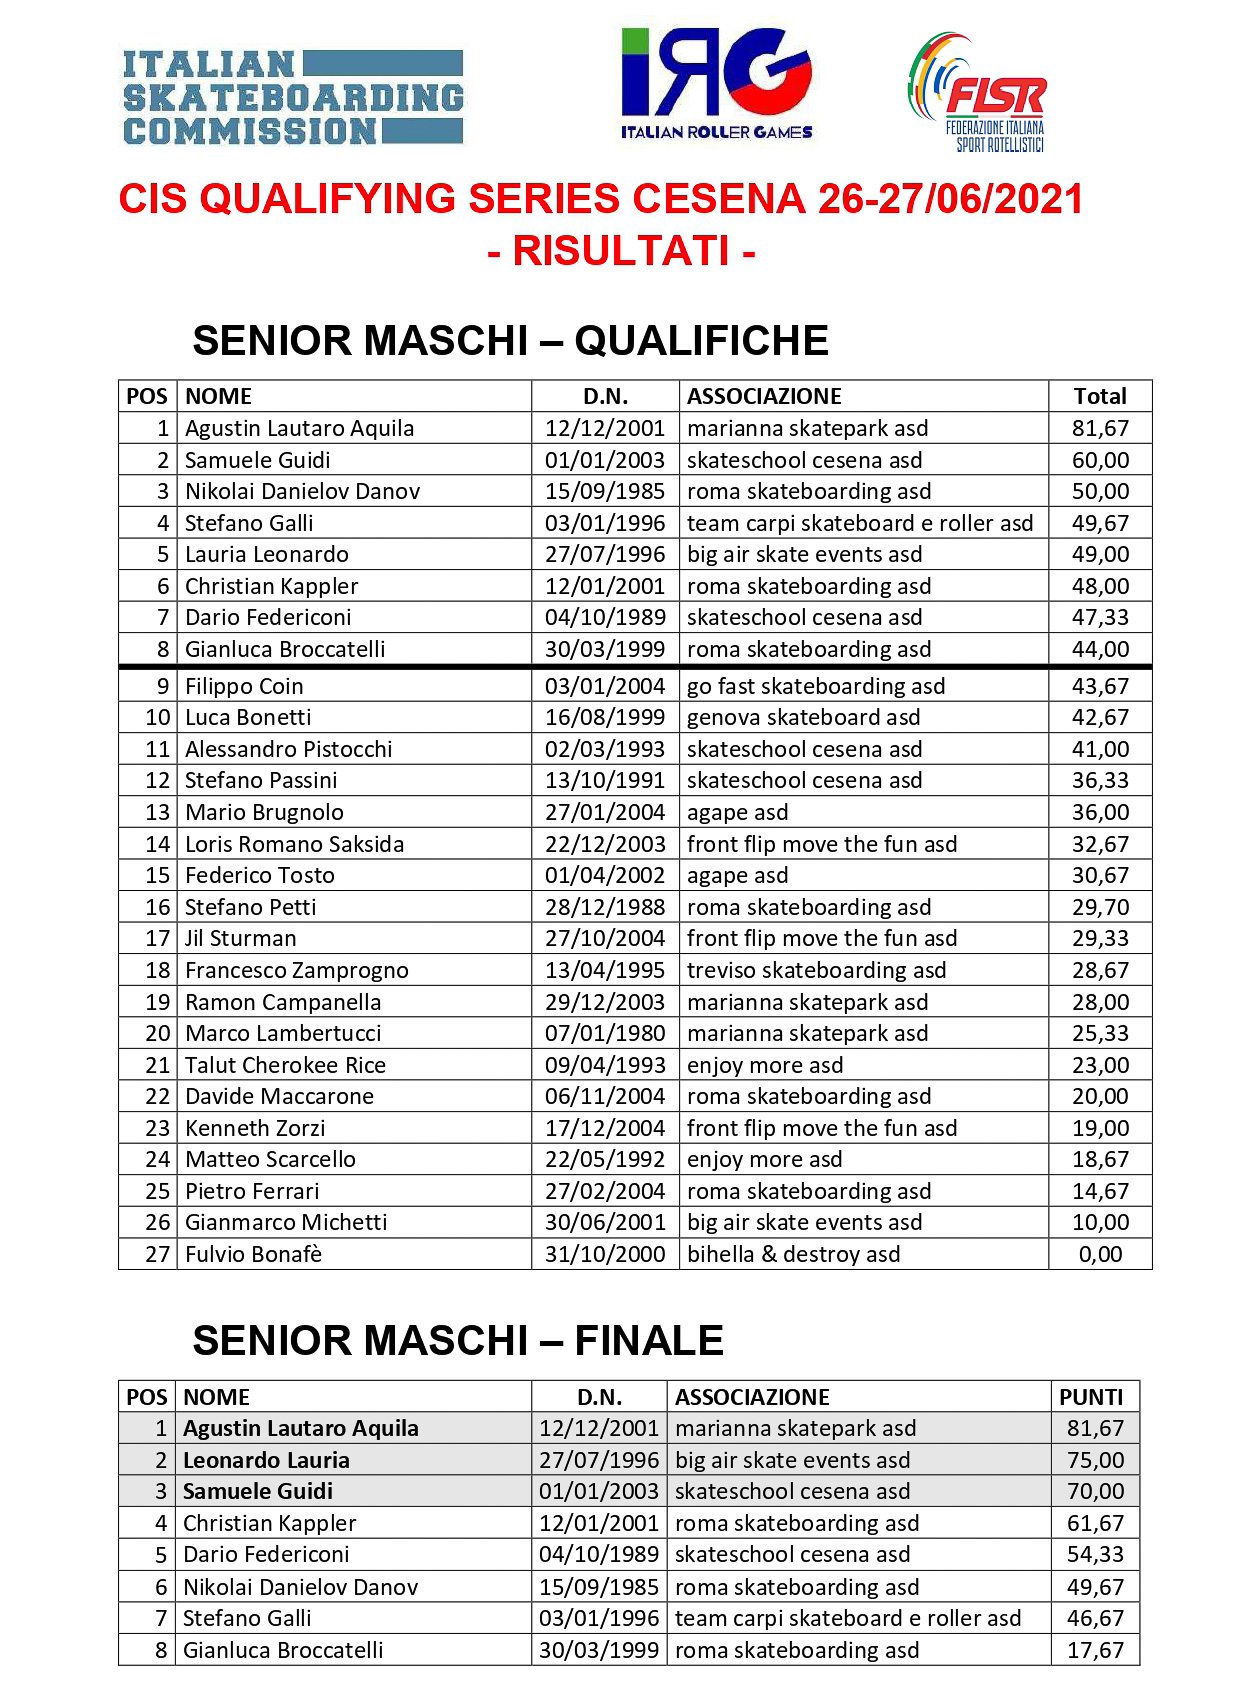 Classifiche Qualifying Series Cesena - Senior Maschi